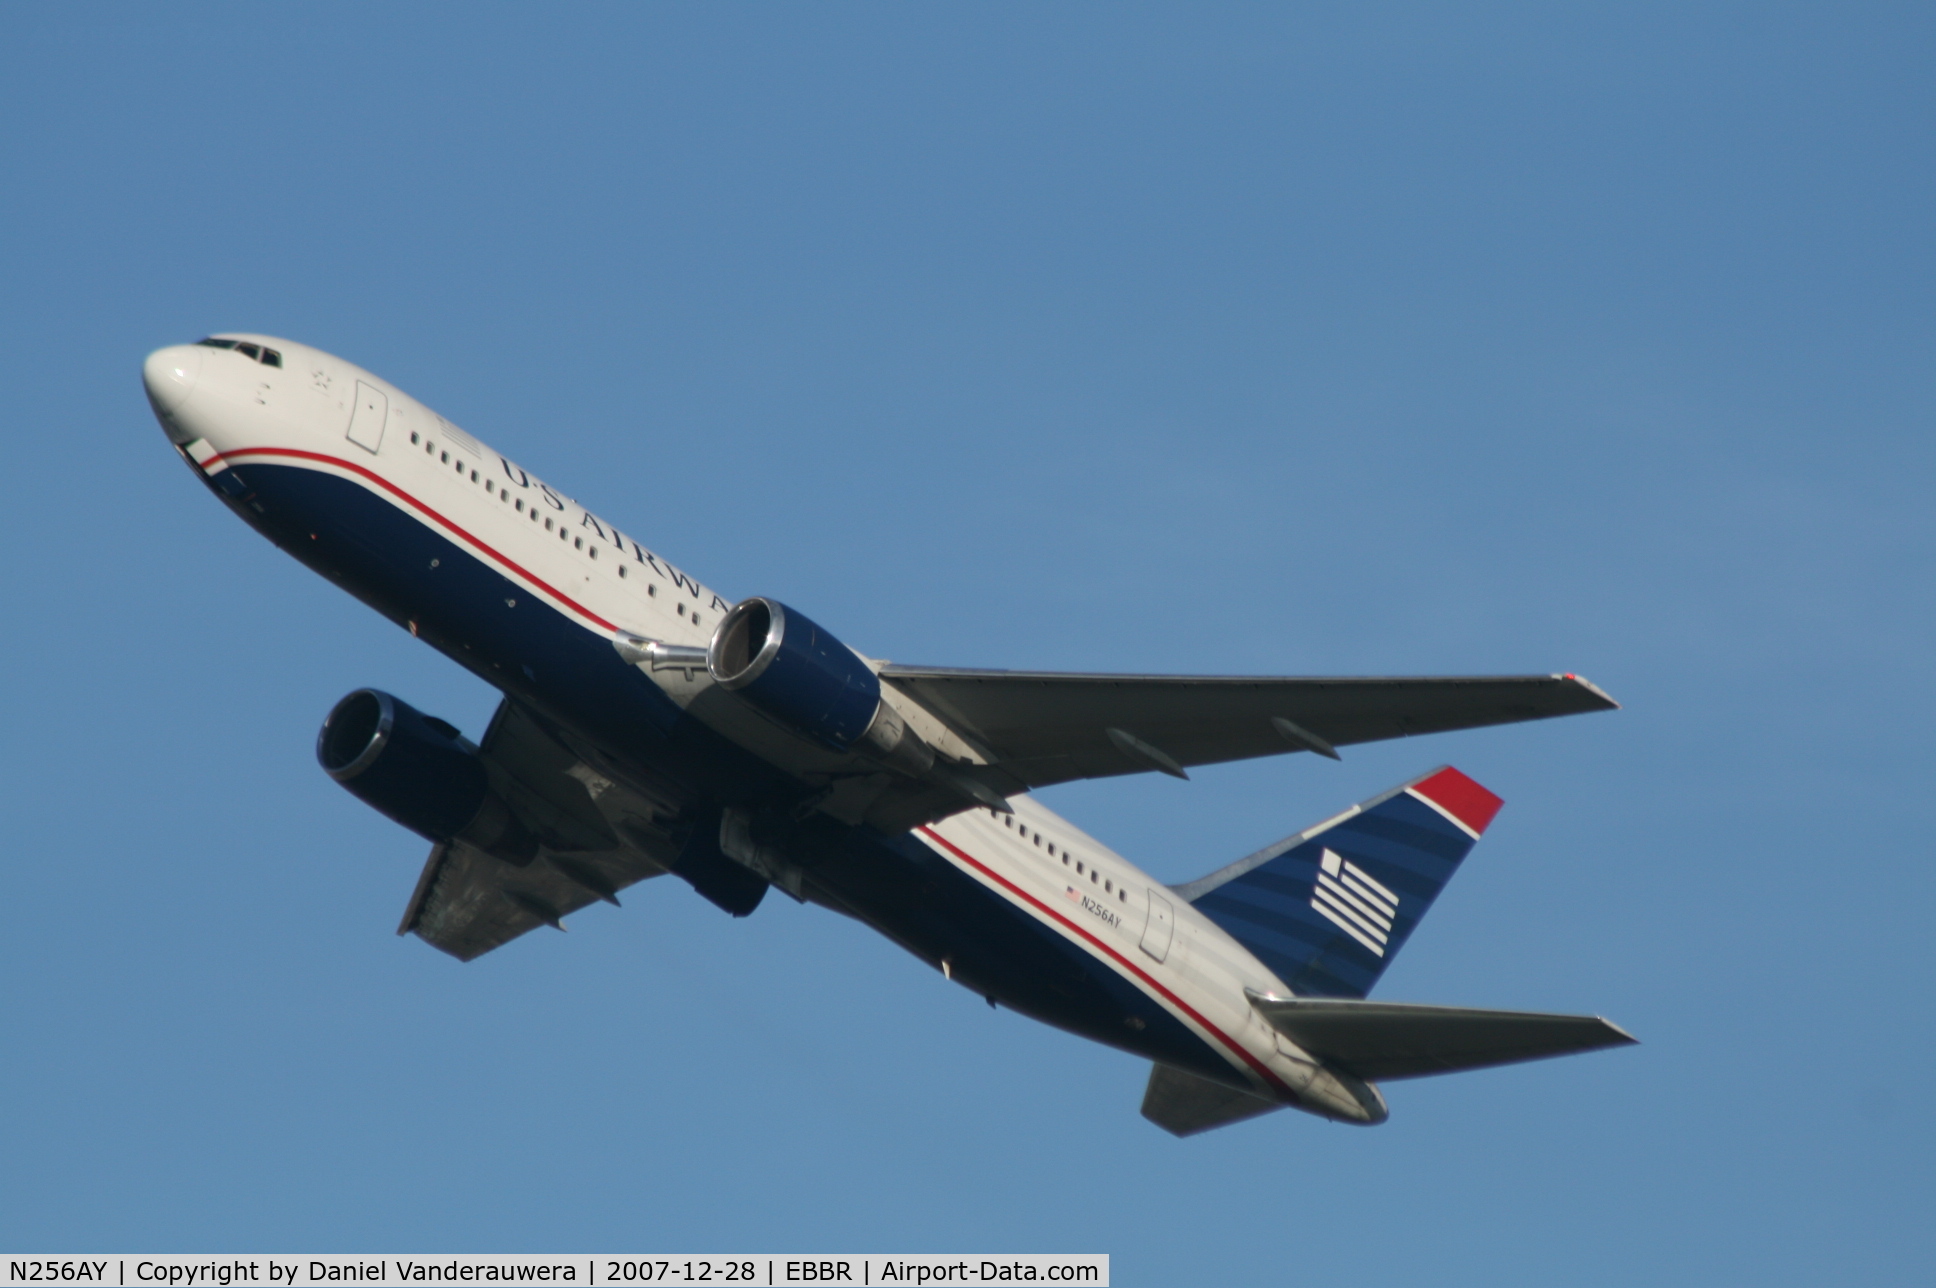 N256AY, 1993 Boeing 767-2B7 C/N 26847, flight US751 is taking off from rwy 25R